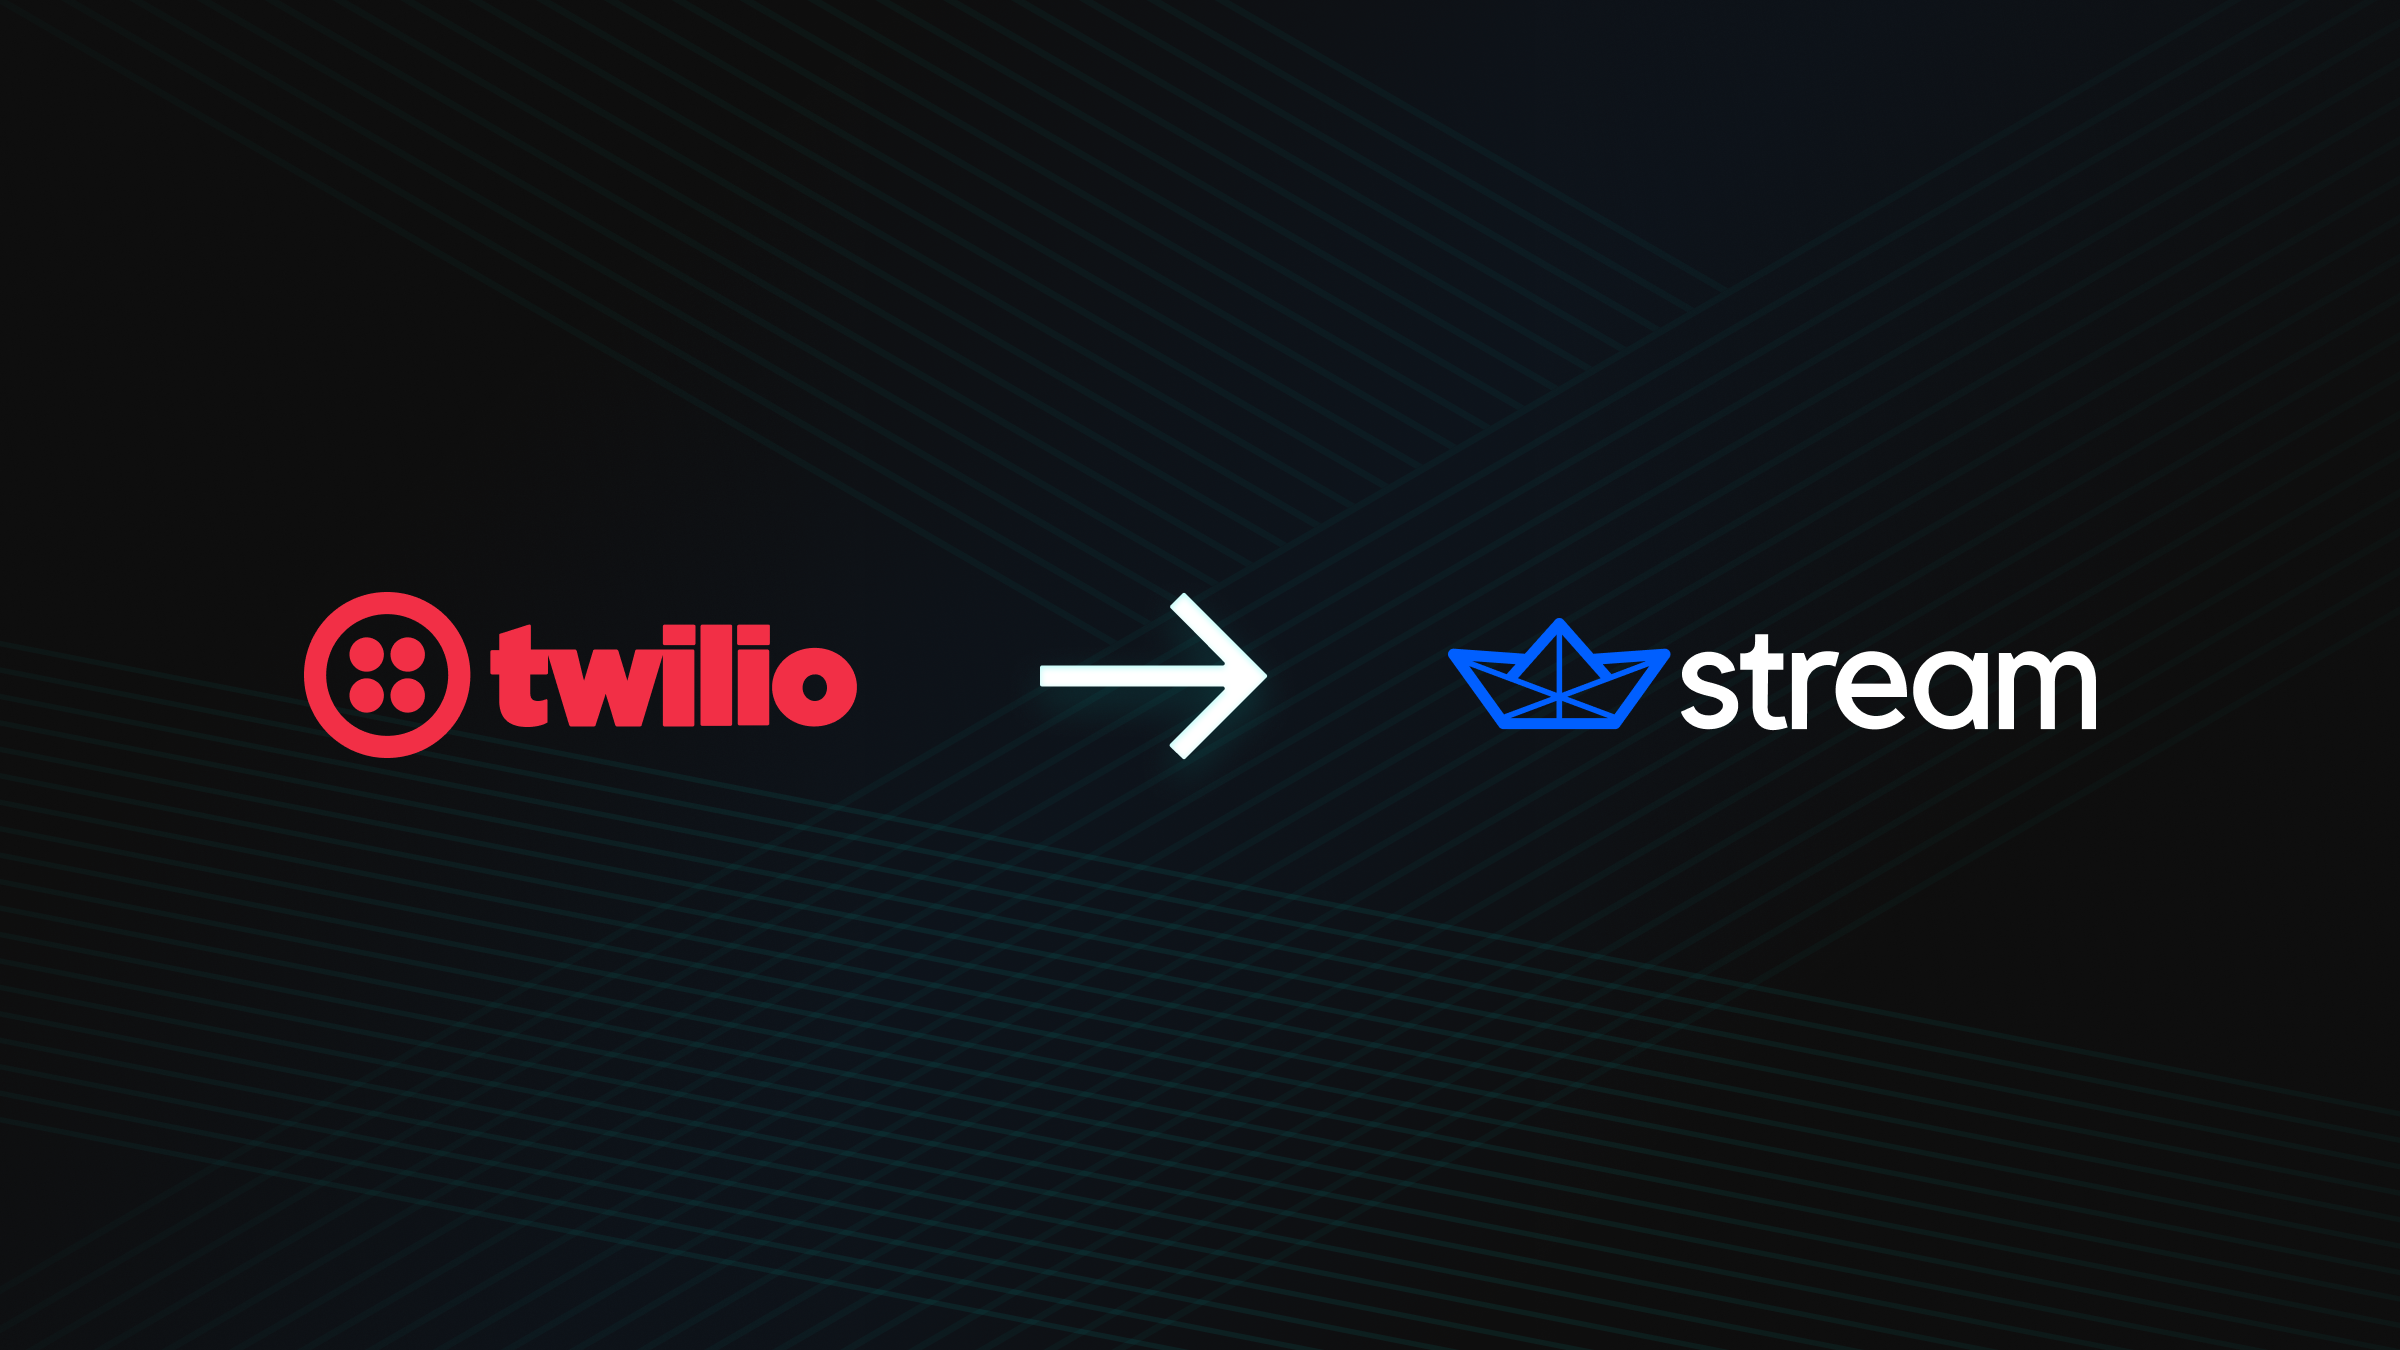 Twilio to Buy Customer Data Startup Segment for $3.2 Billion